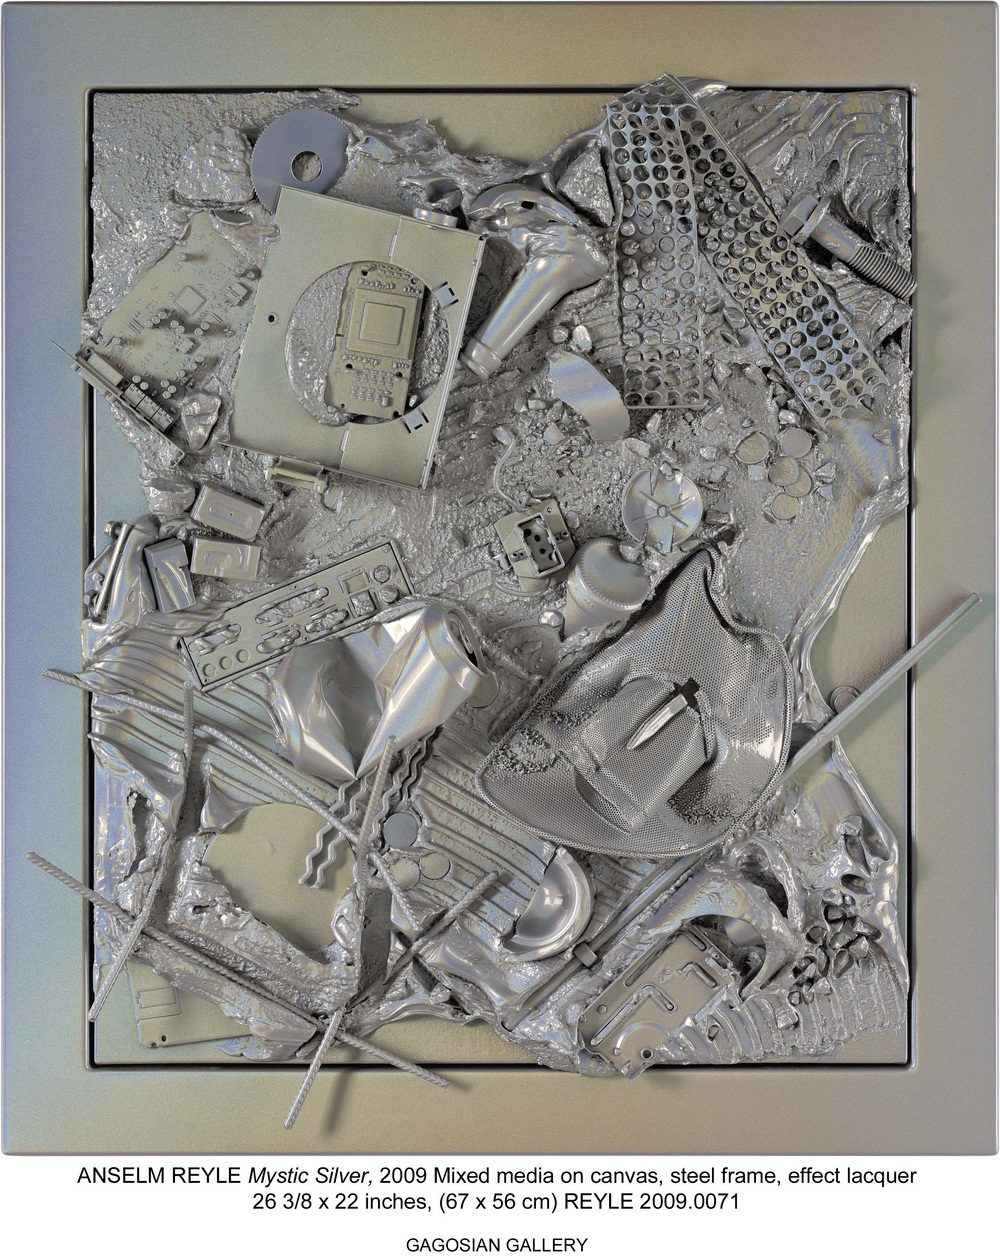 Archisearch - 1. Anselm Reyle, Mystic Silver, 2009, μικτή τεχνική σε καμβά, μεταλλική κορνίζα, ειδική λάκα, 67x56cm, ευγενική παραχώρηση Gagosian Gallery Anselm Reyle, Mystic Silver, 2009, mixed media on canvas, steel frame, effect lacquer, 67x56cm, courtesy Gagosian Gallery